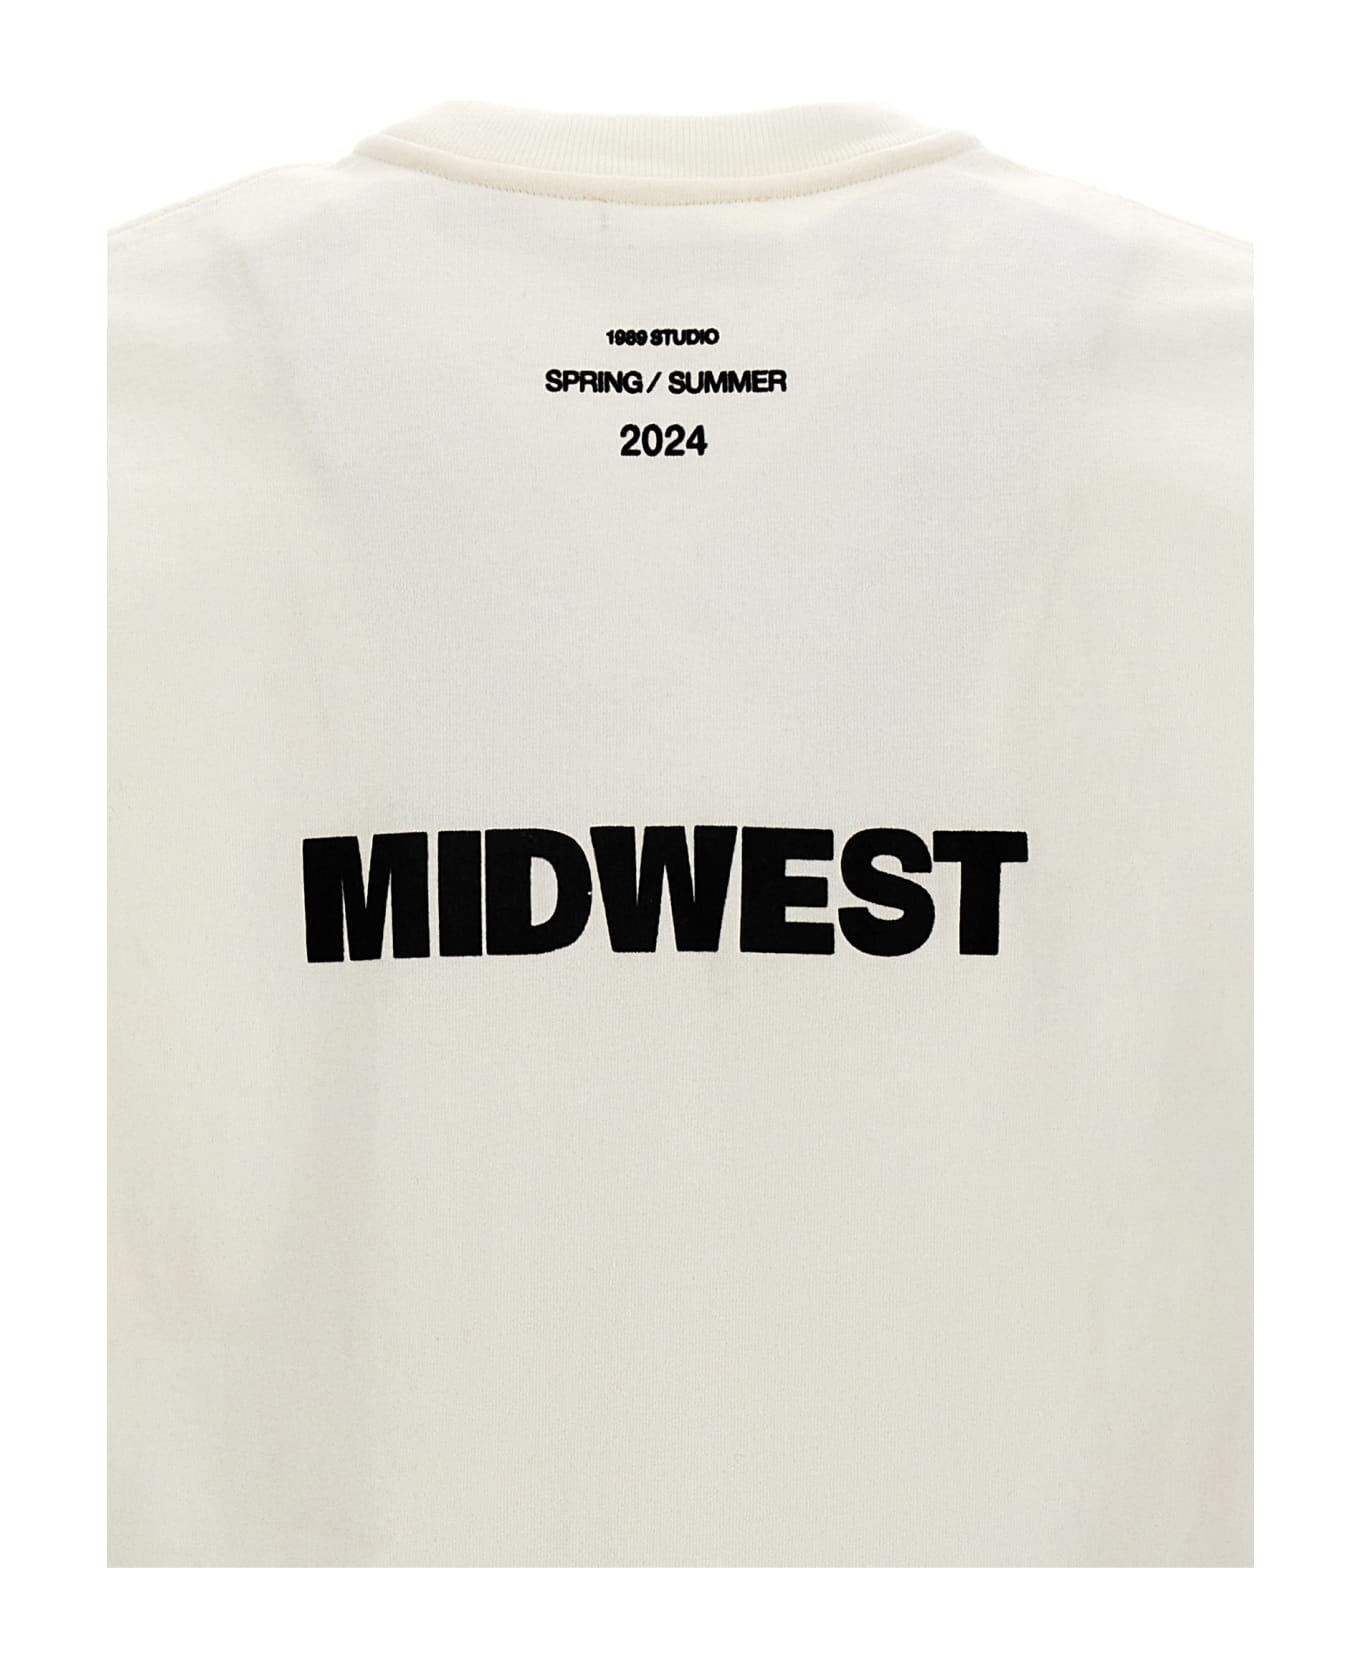 1989 Studio 'midwest' T-shirt - White/Black